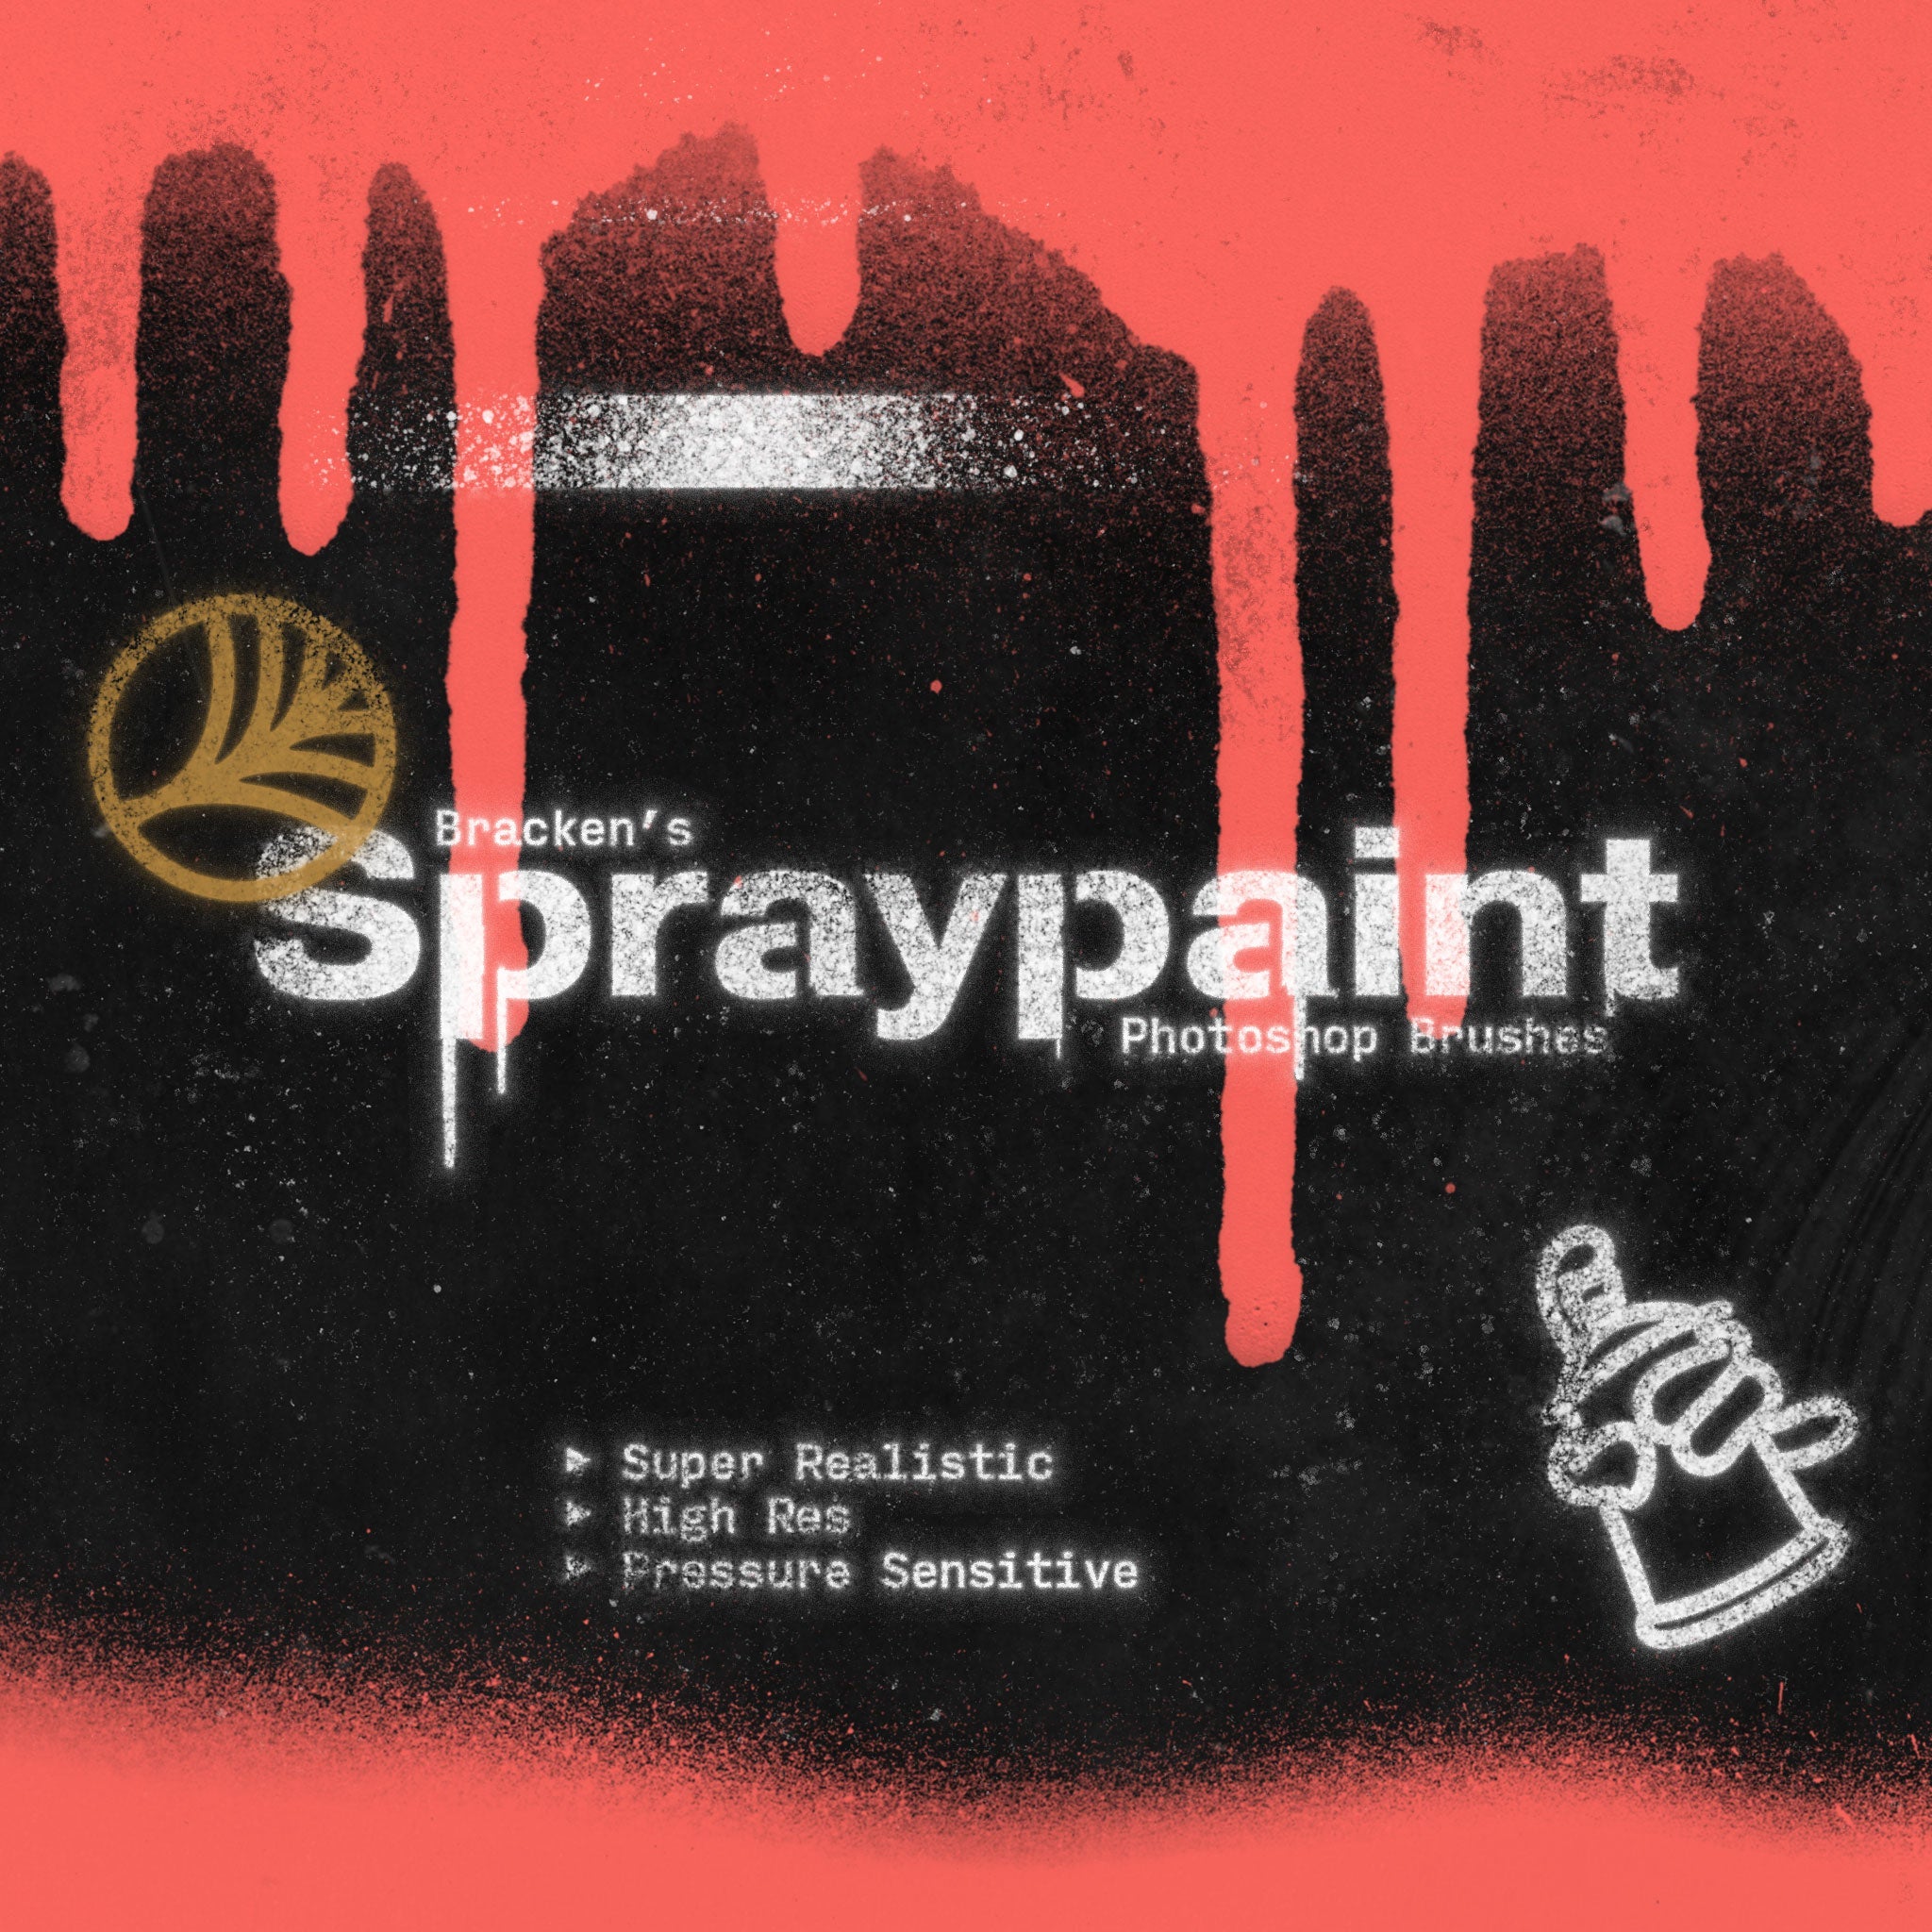 Spray Paint - Bracken